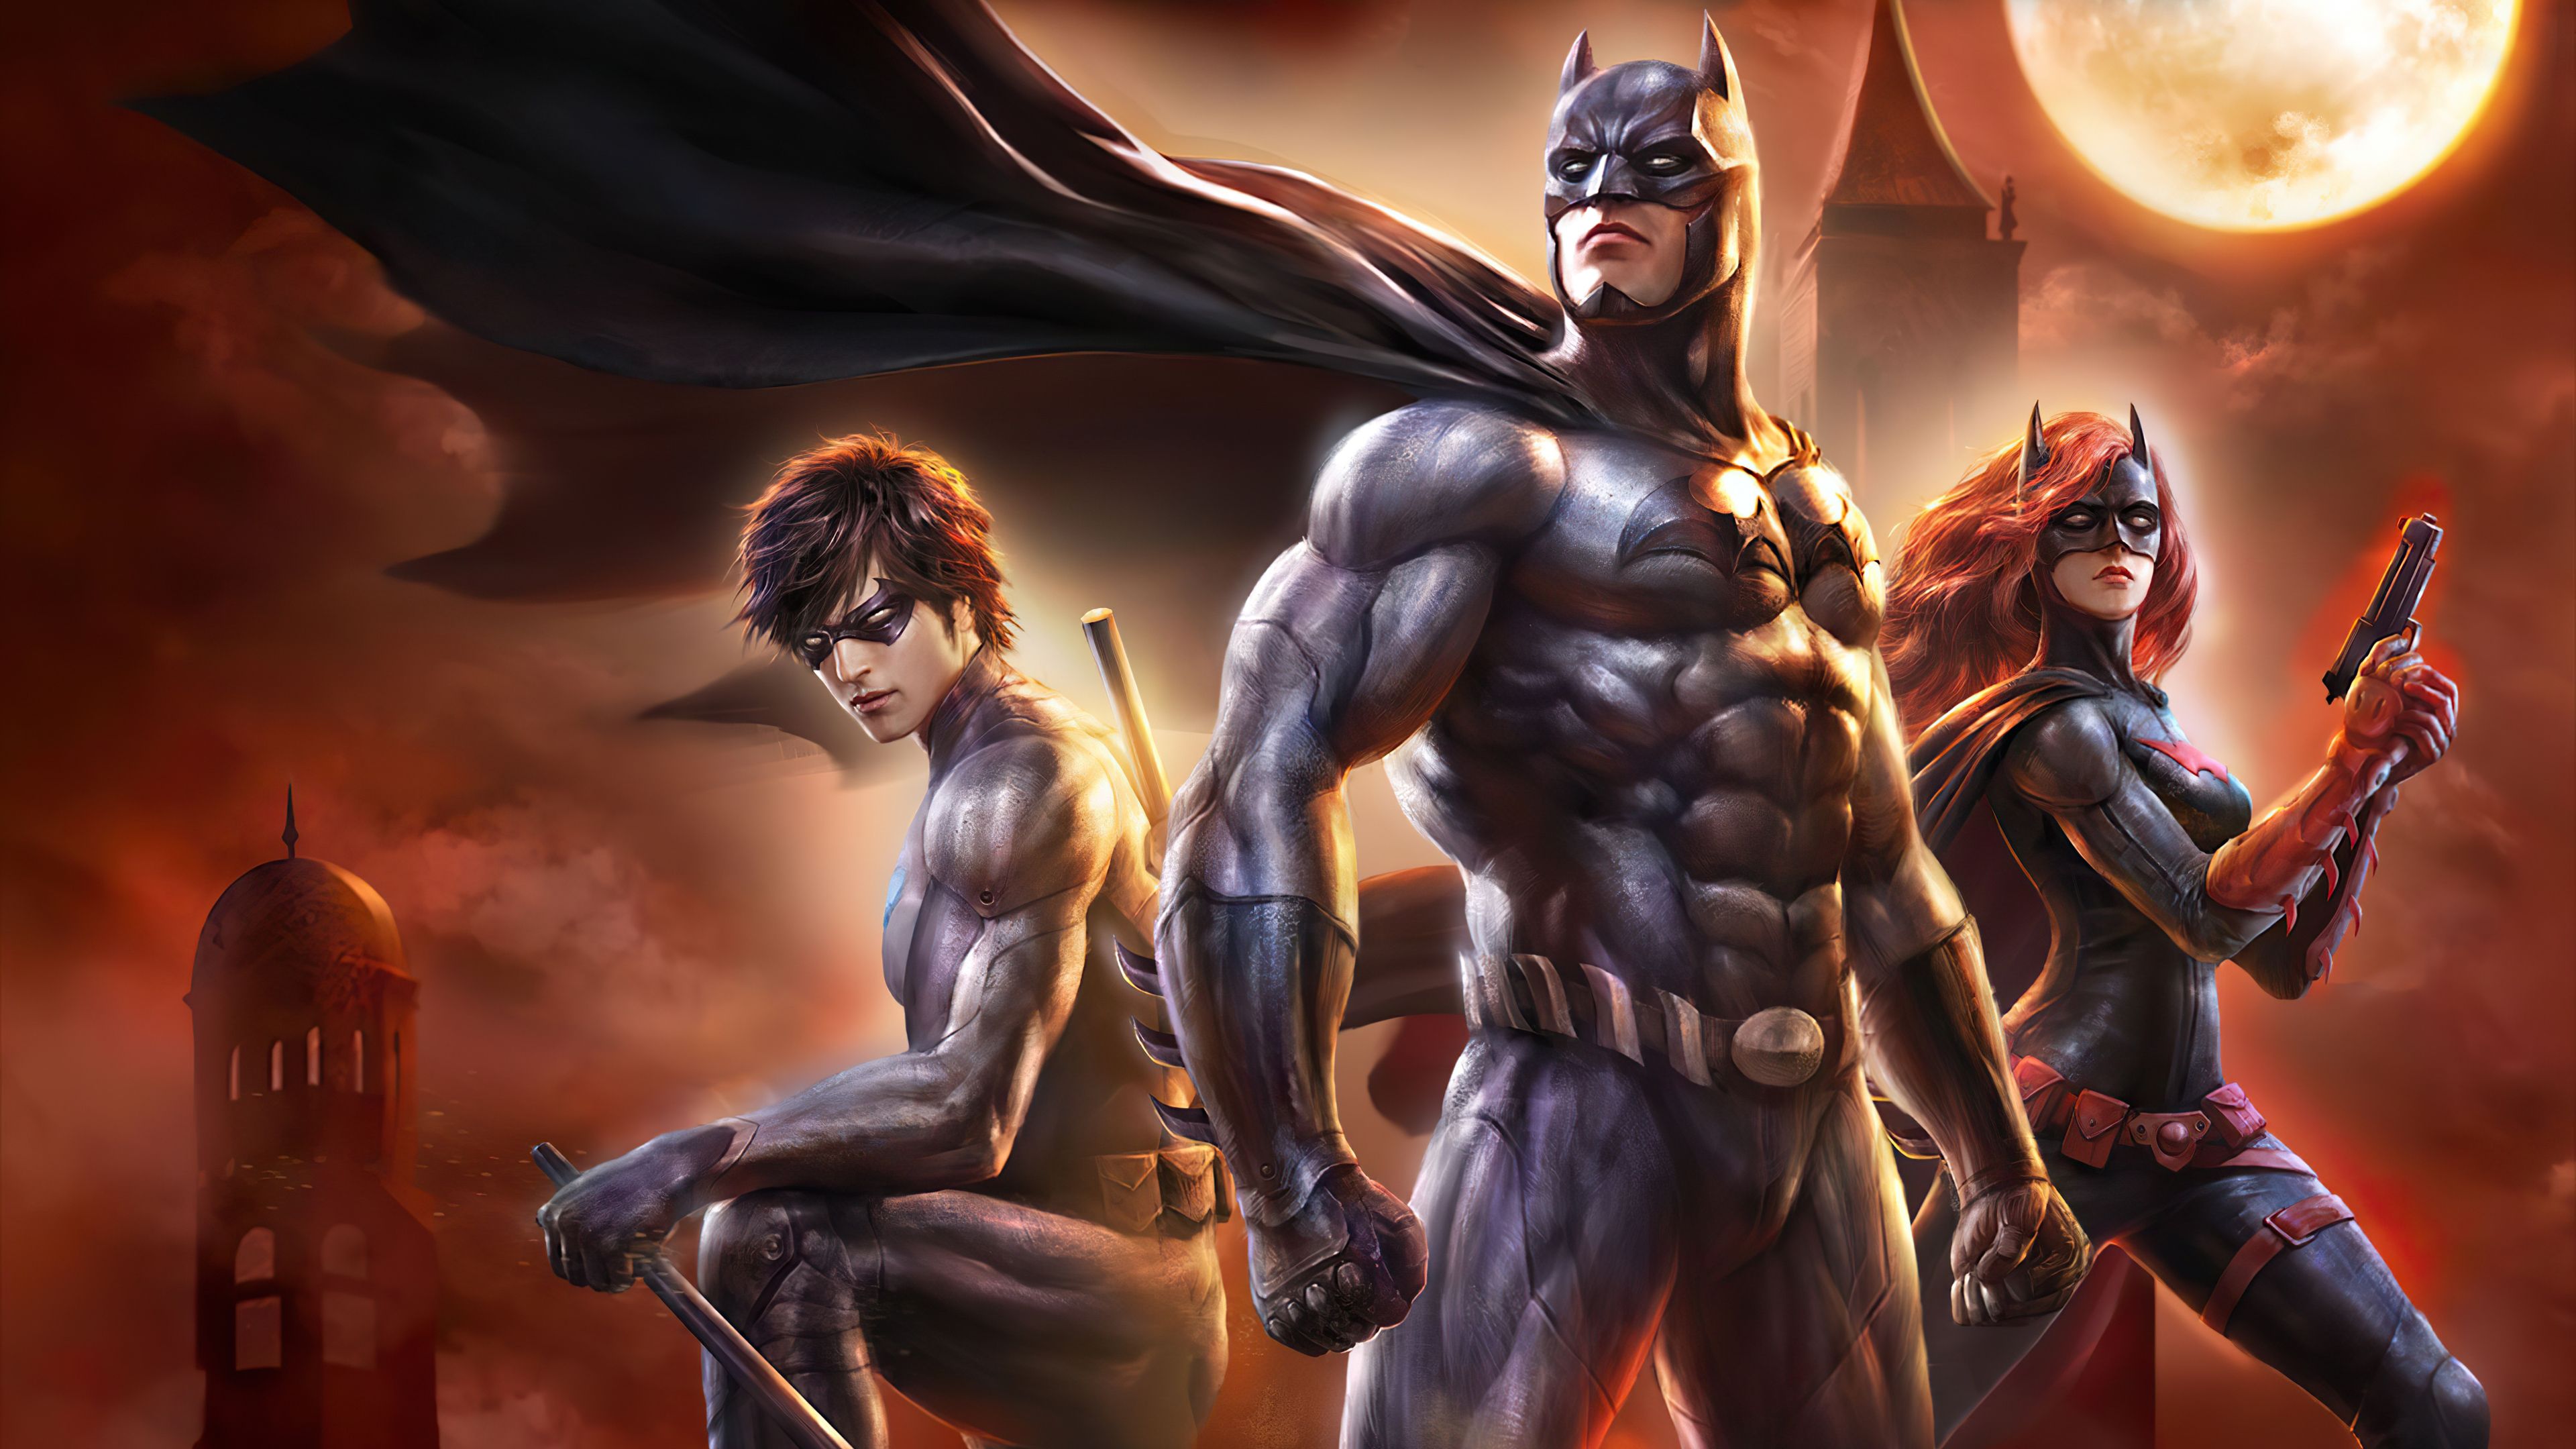 DC Batman Team Wallpaper, HD Superheroes 4K Wallpaper, Image, Photo and Background